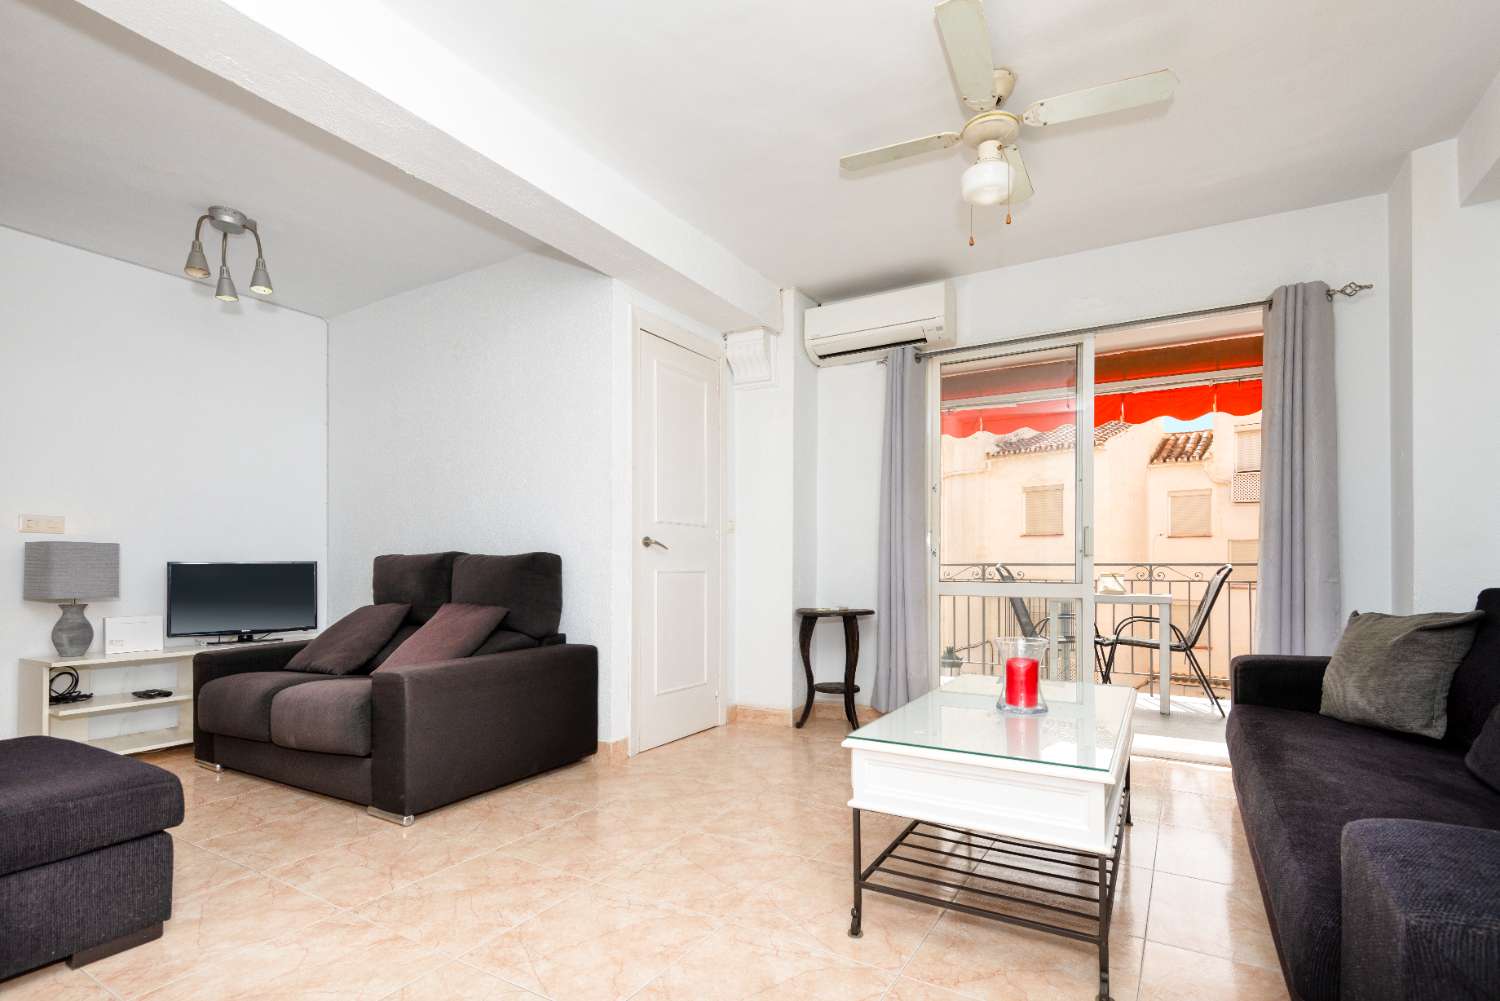 Appartement te koop in Edificio Bahia, naast Hotel Parador in Nerja